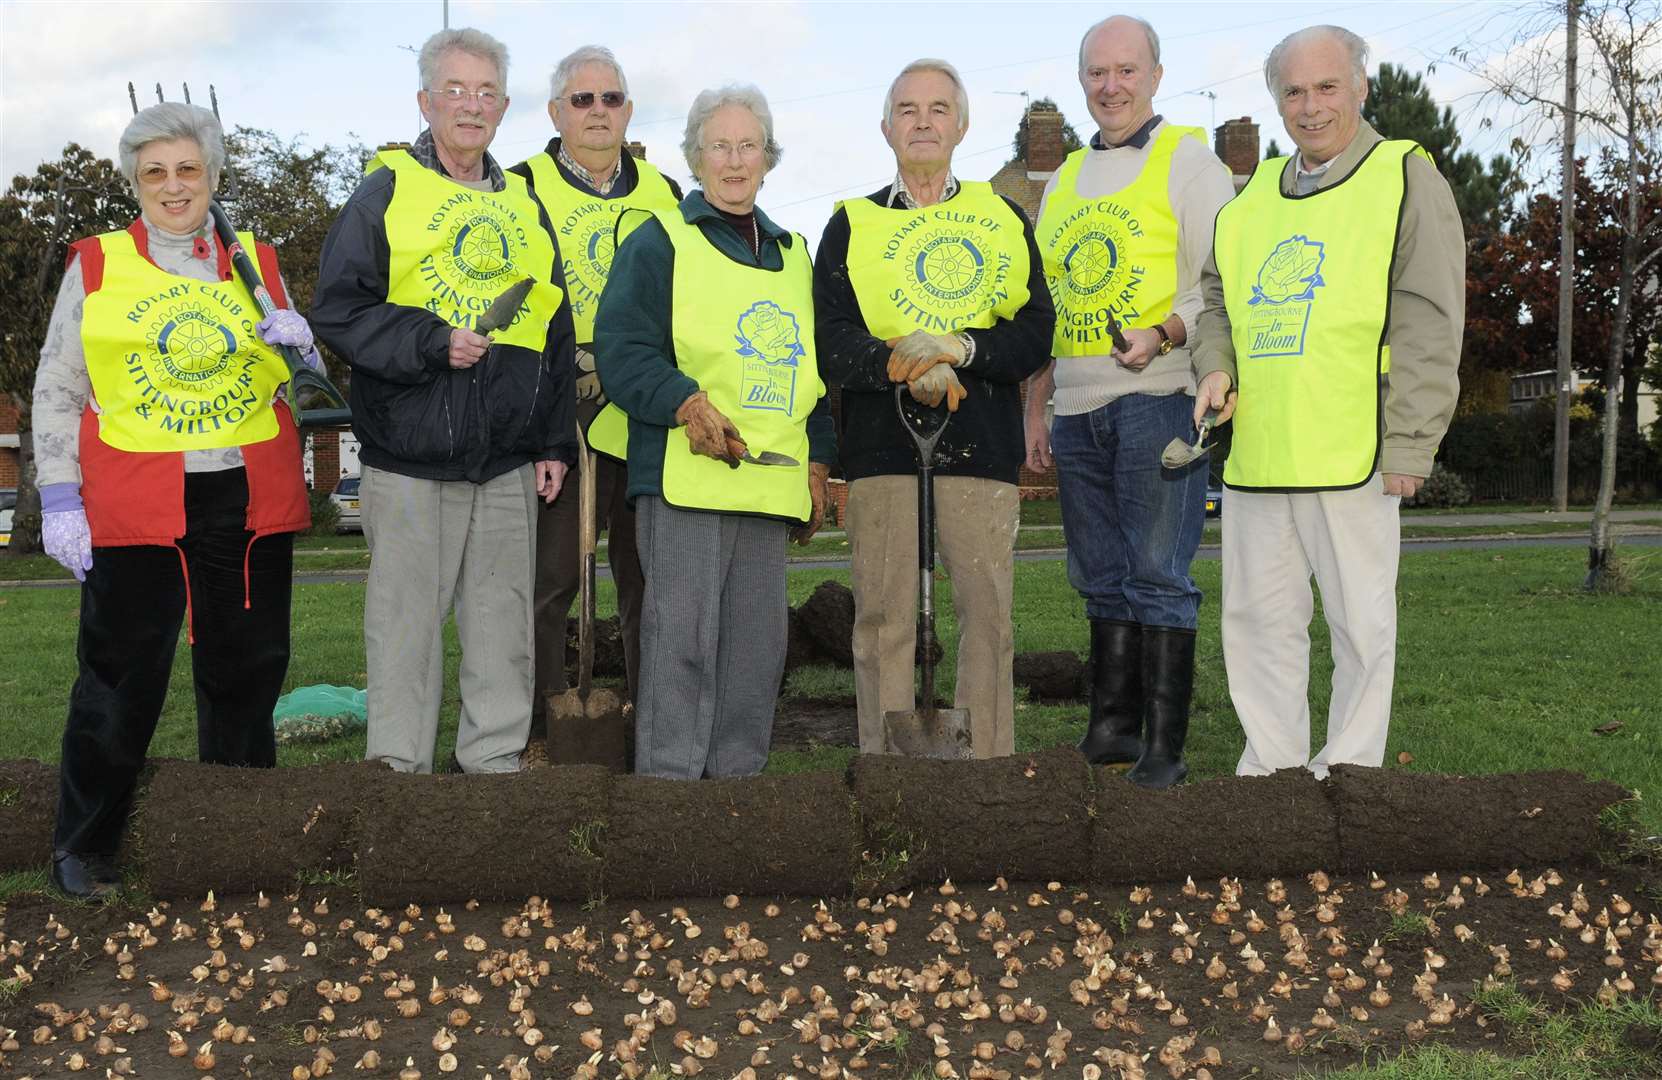 Rotary club members Valerie Hildred, John Evans, Barton Dolding, Brenda Moore, John House, and Peter Blundell plant bulbs in Homewood Avenue, Sittingbourne